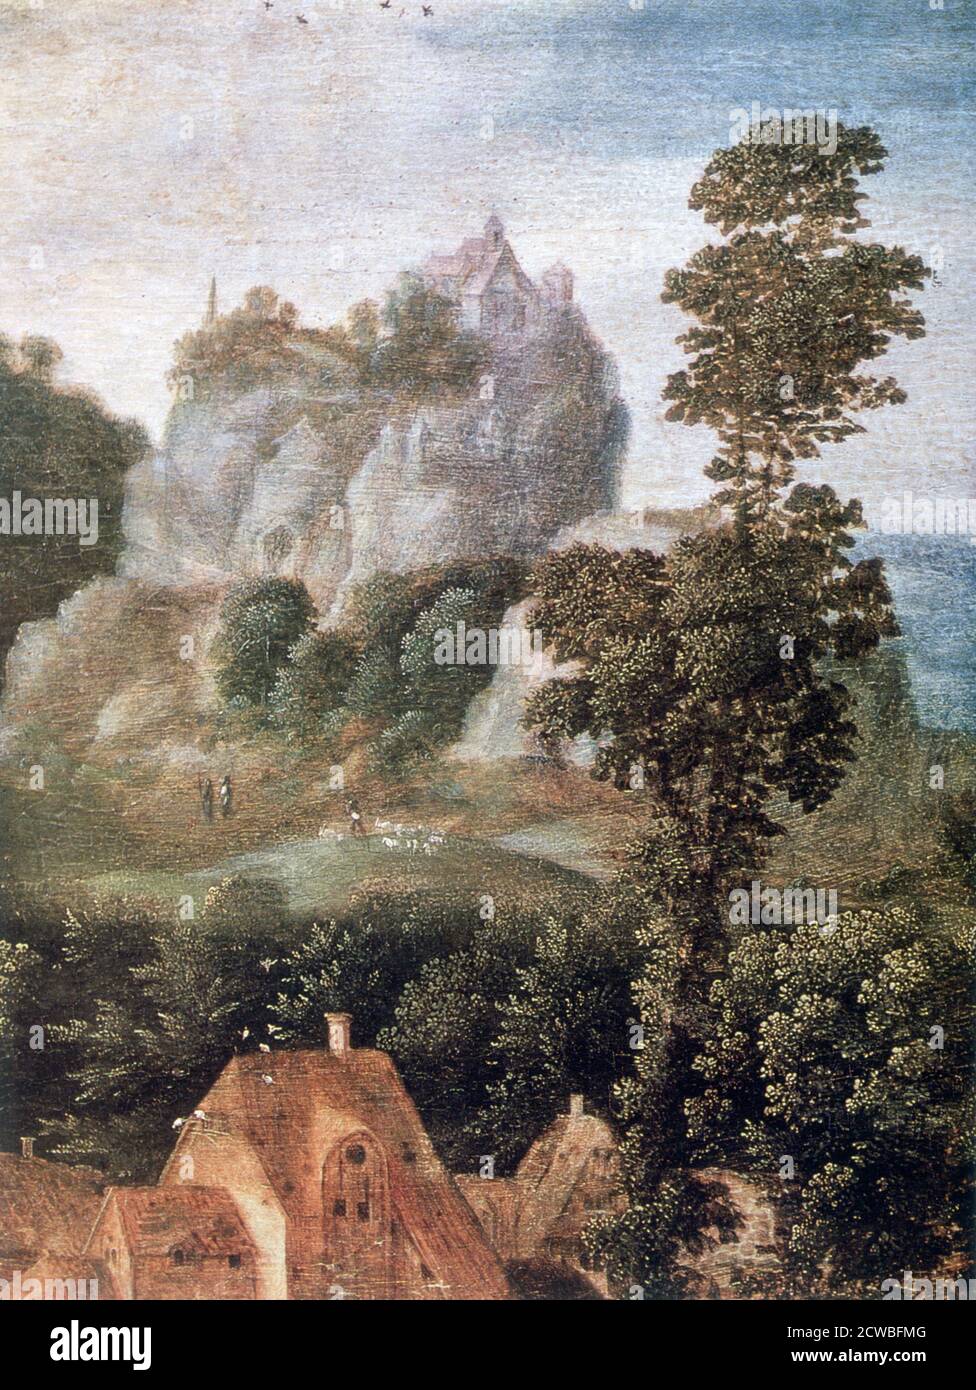 Flight into Egypt', (Detail), c1530-1550. Künstler: Herri met de Bles. Herri met de Bles (1510-1550) war flämischer Landschaftsmaler der Nordrenaissance und des Manierismus. Stockfoto